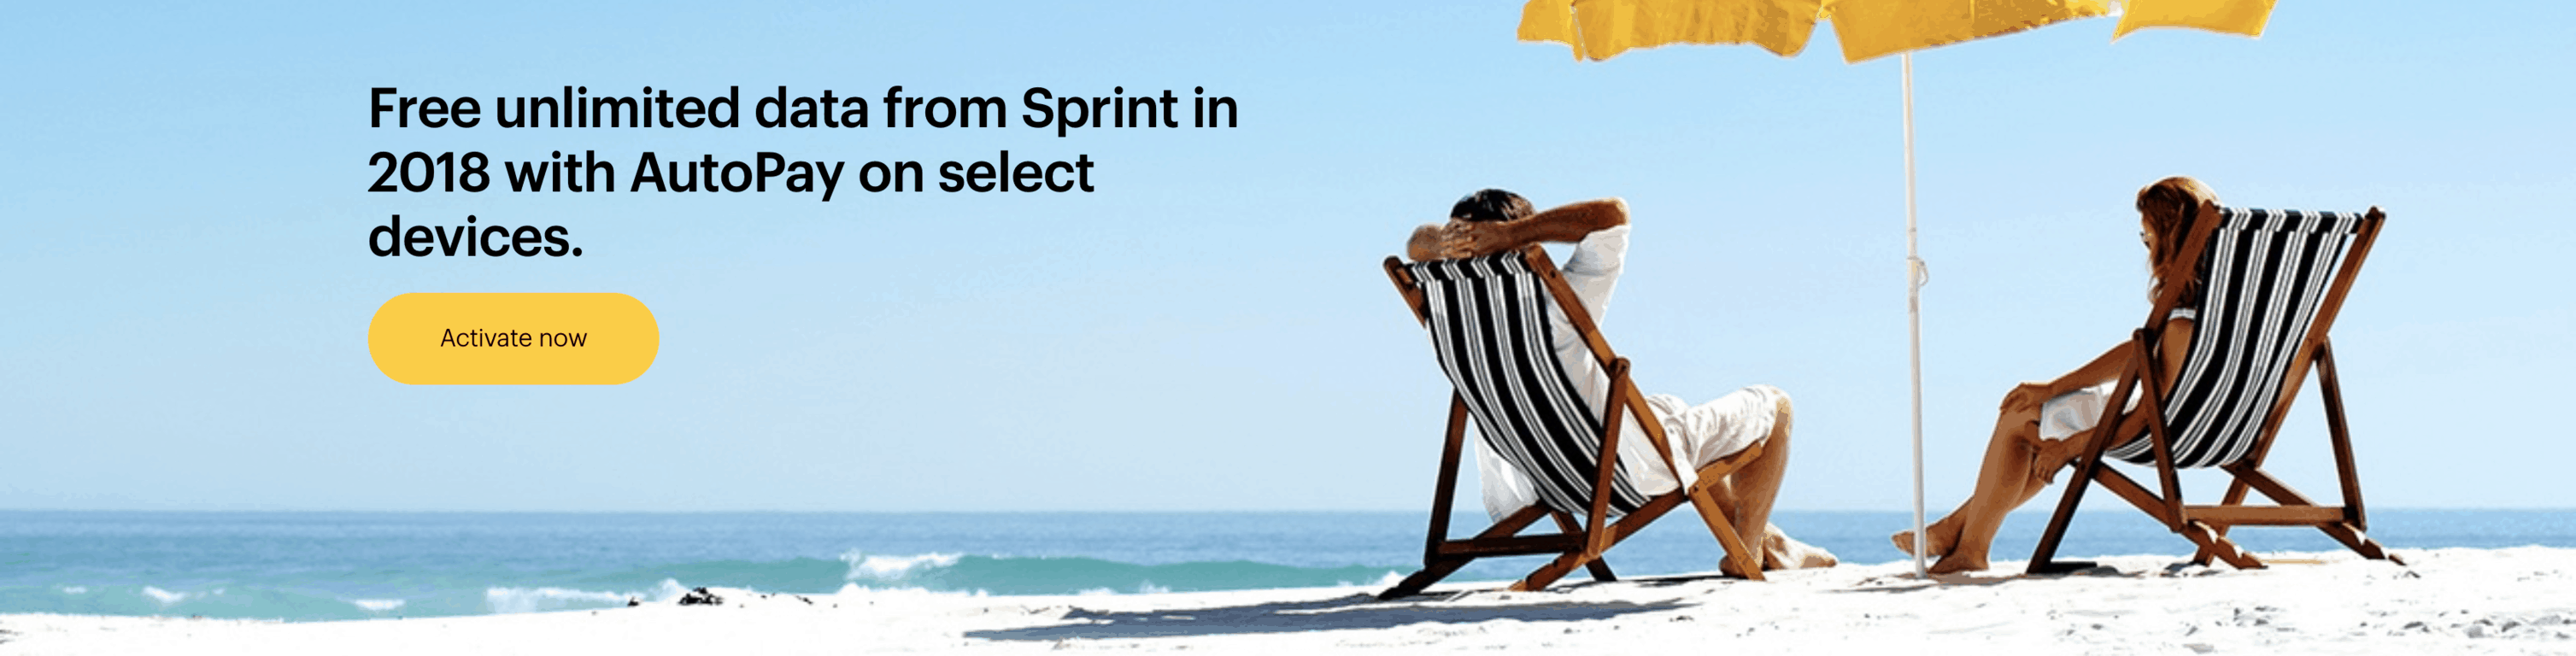 Sprint, free unlimited data, Windows 10 on ARM